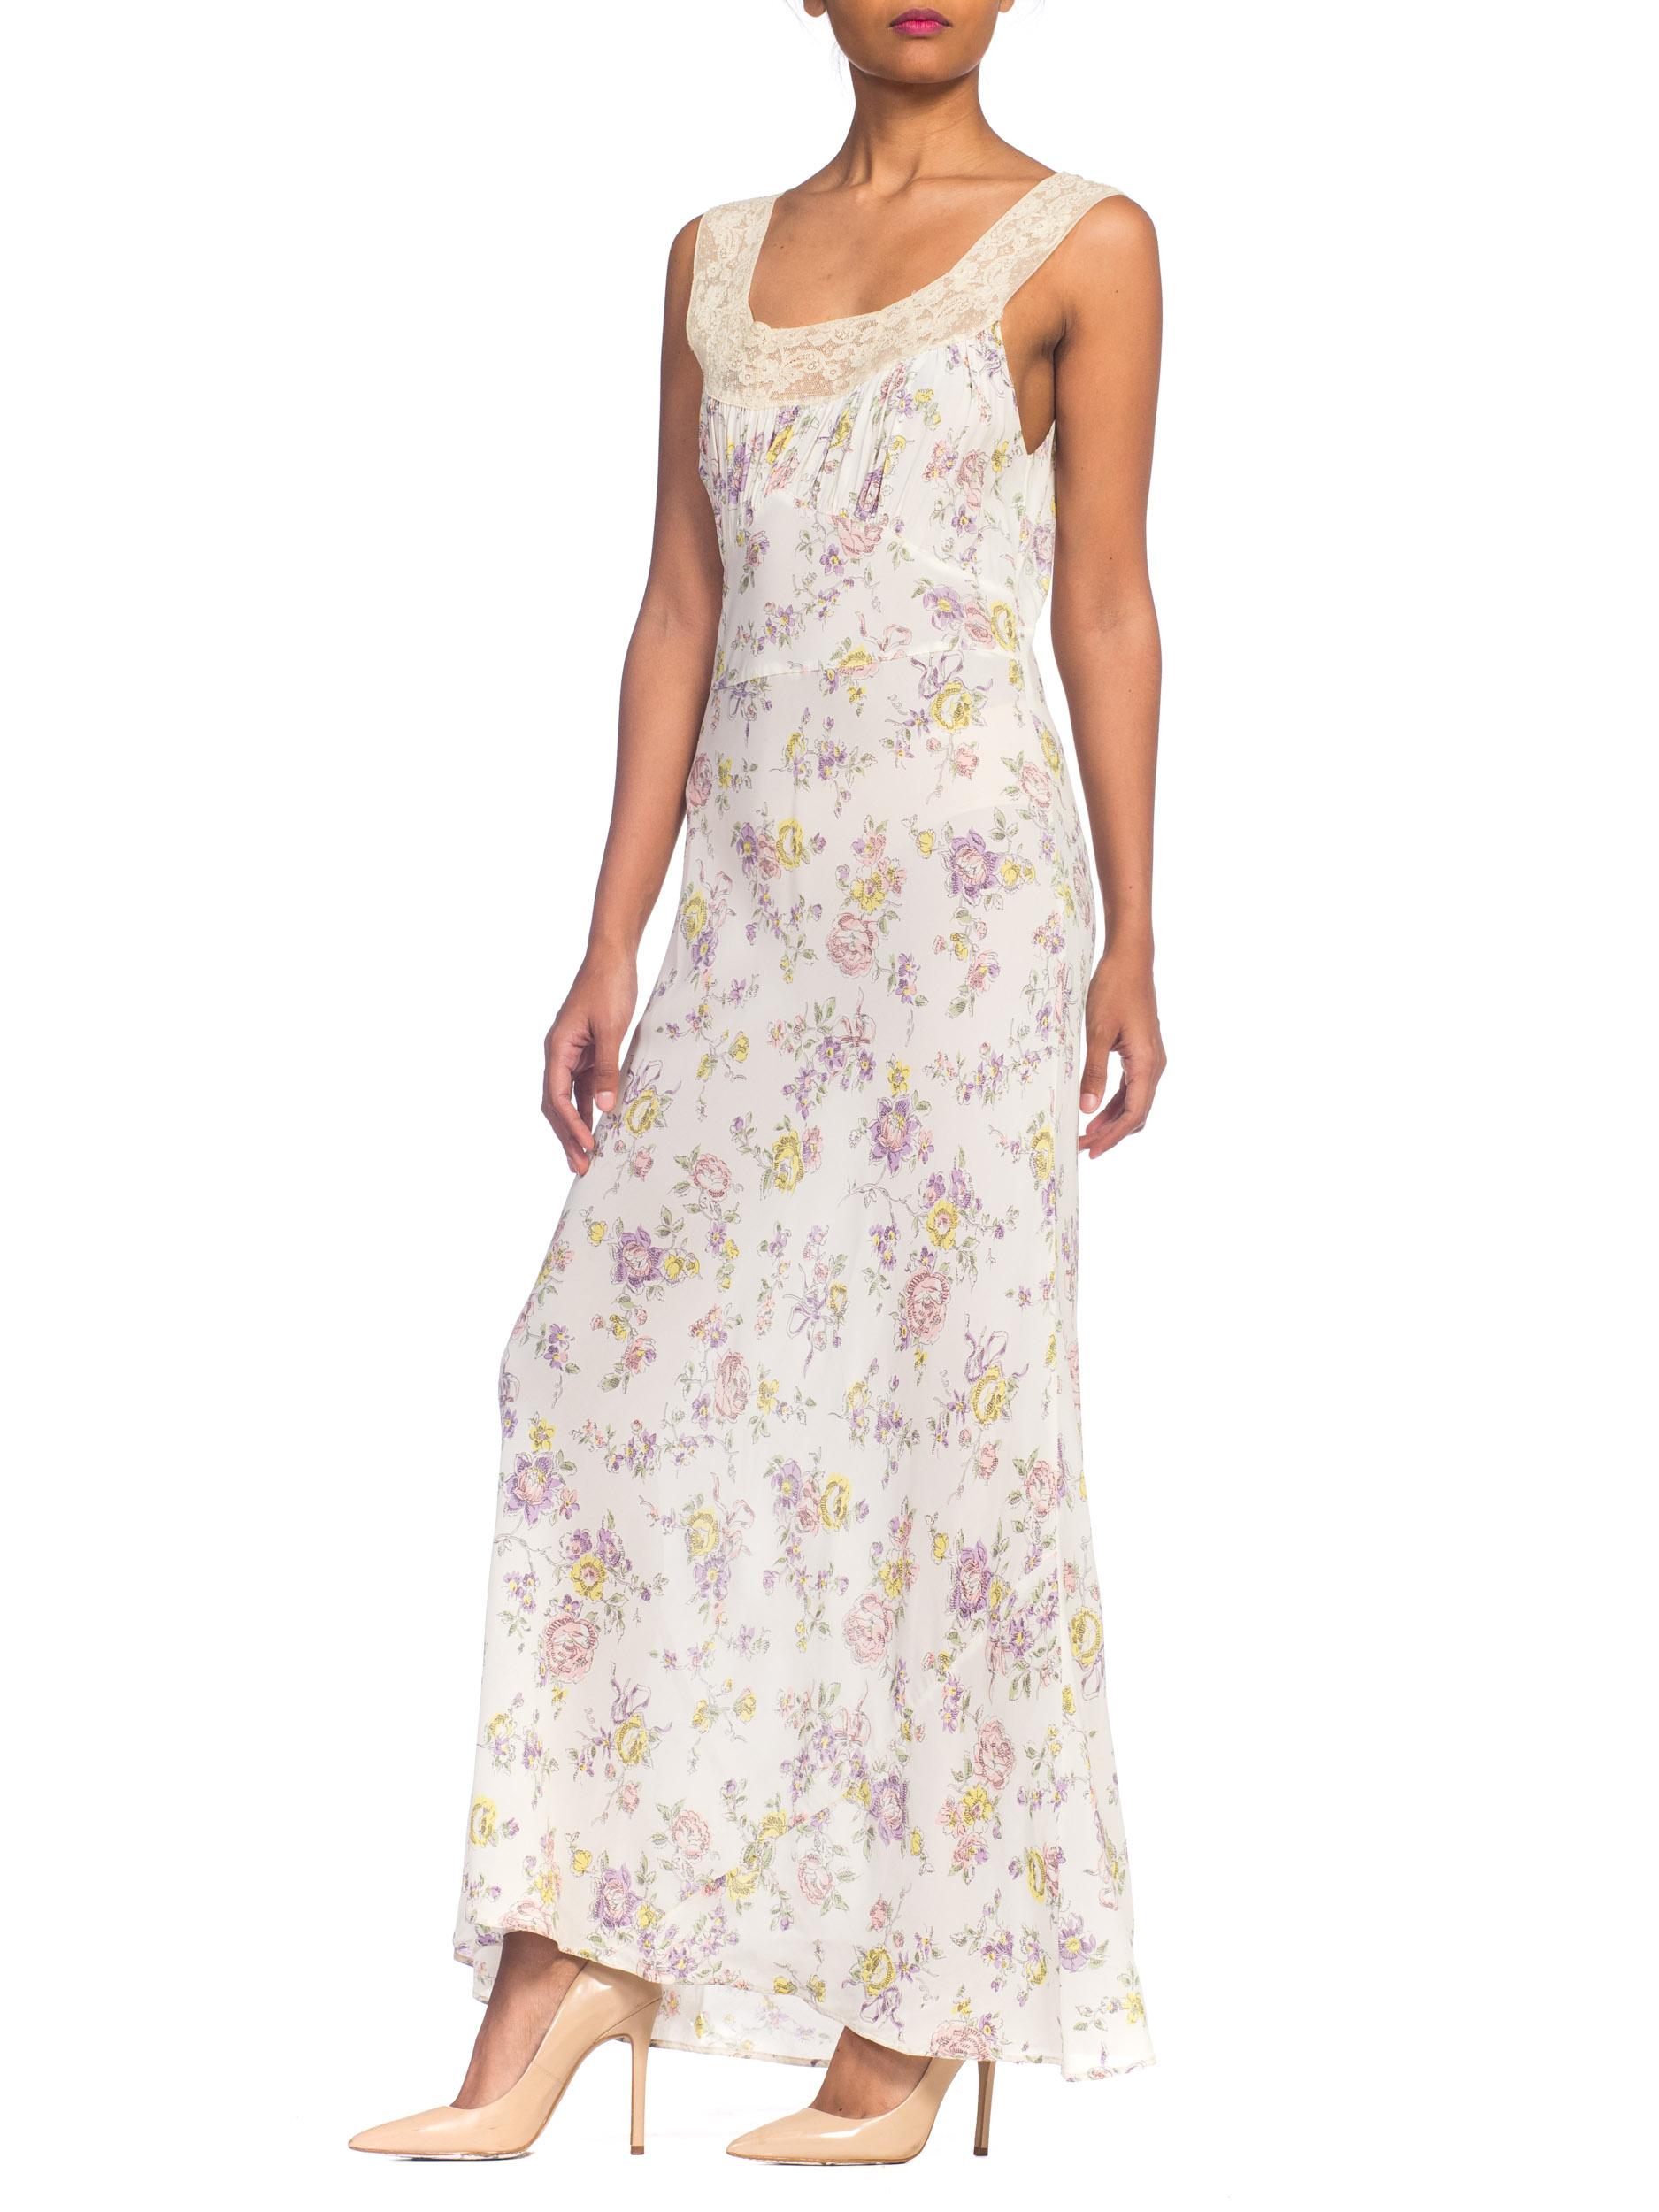 1930s Bias Cut Floral Rayon & Lace Negligee Slip Dress 5